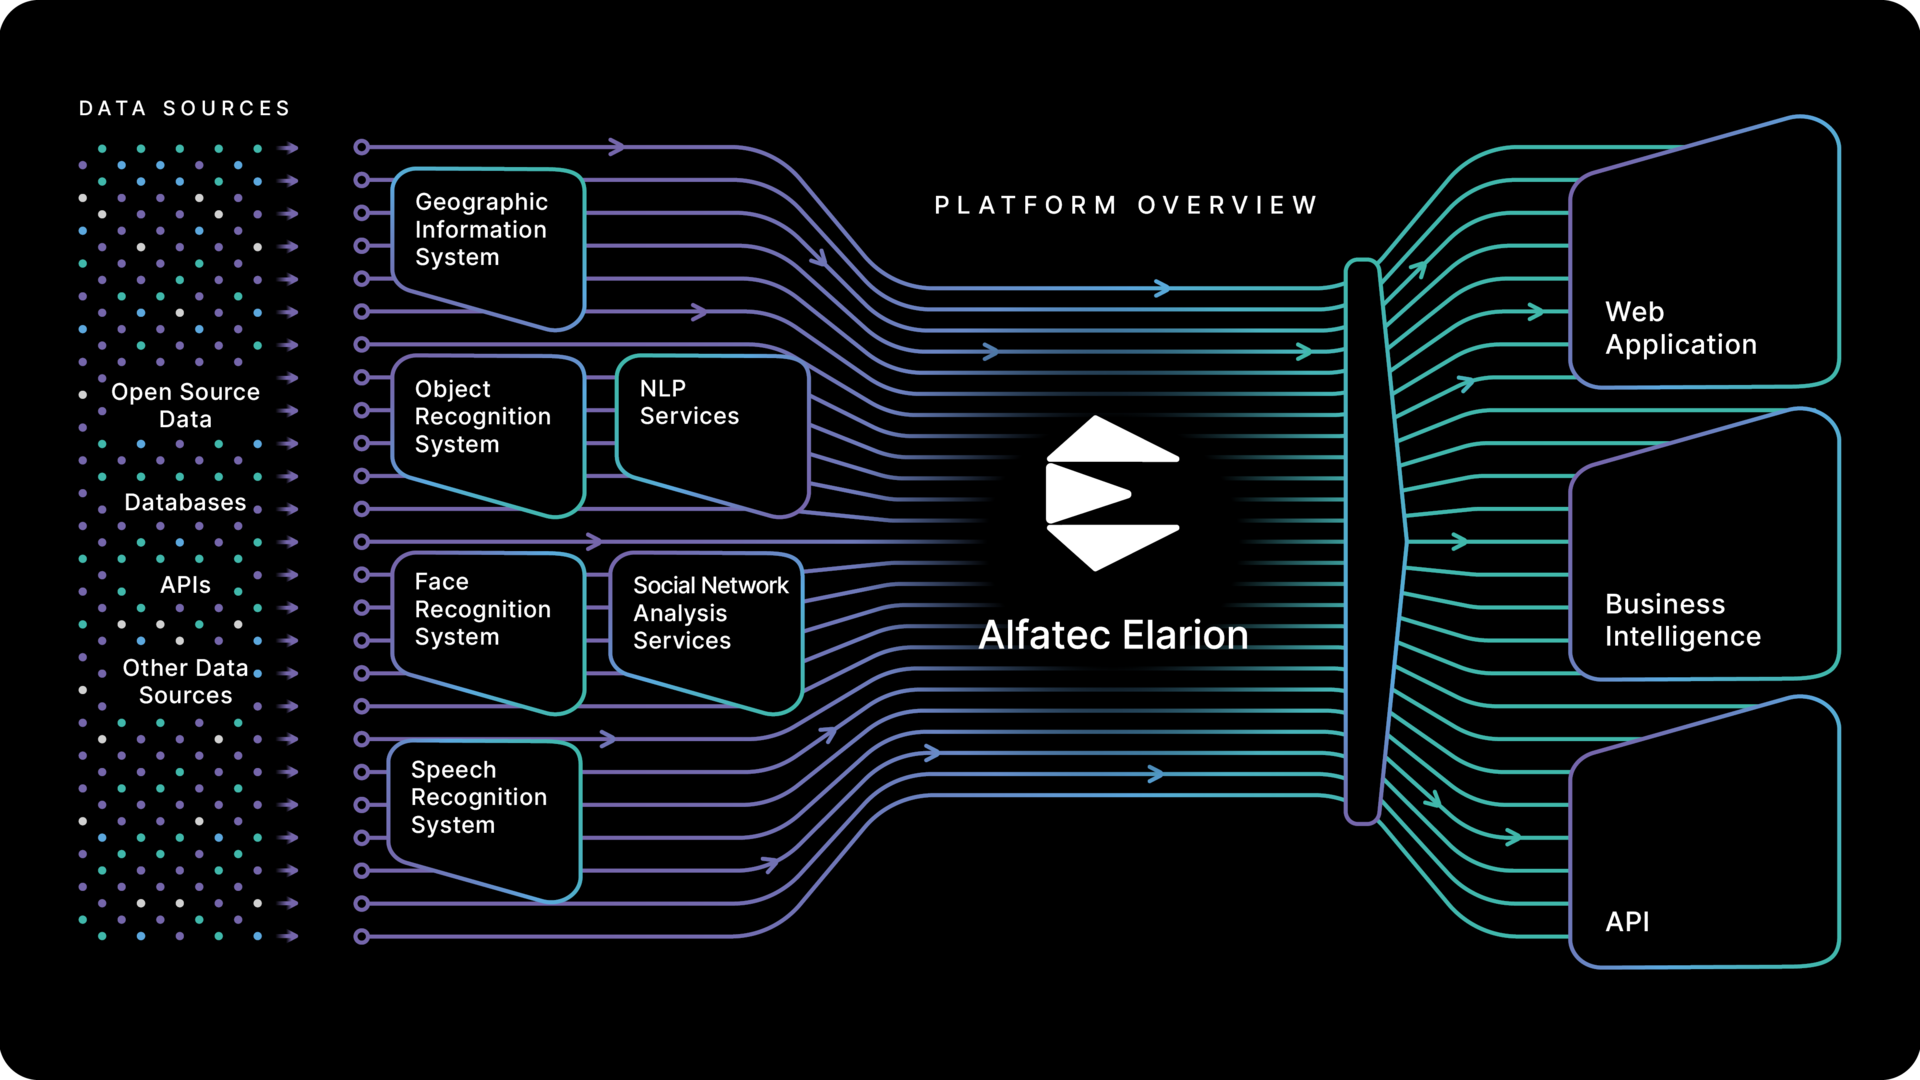 Platform overview